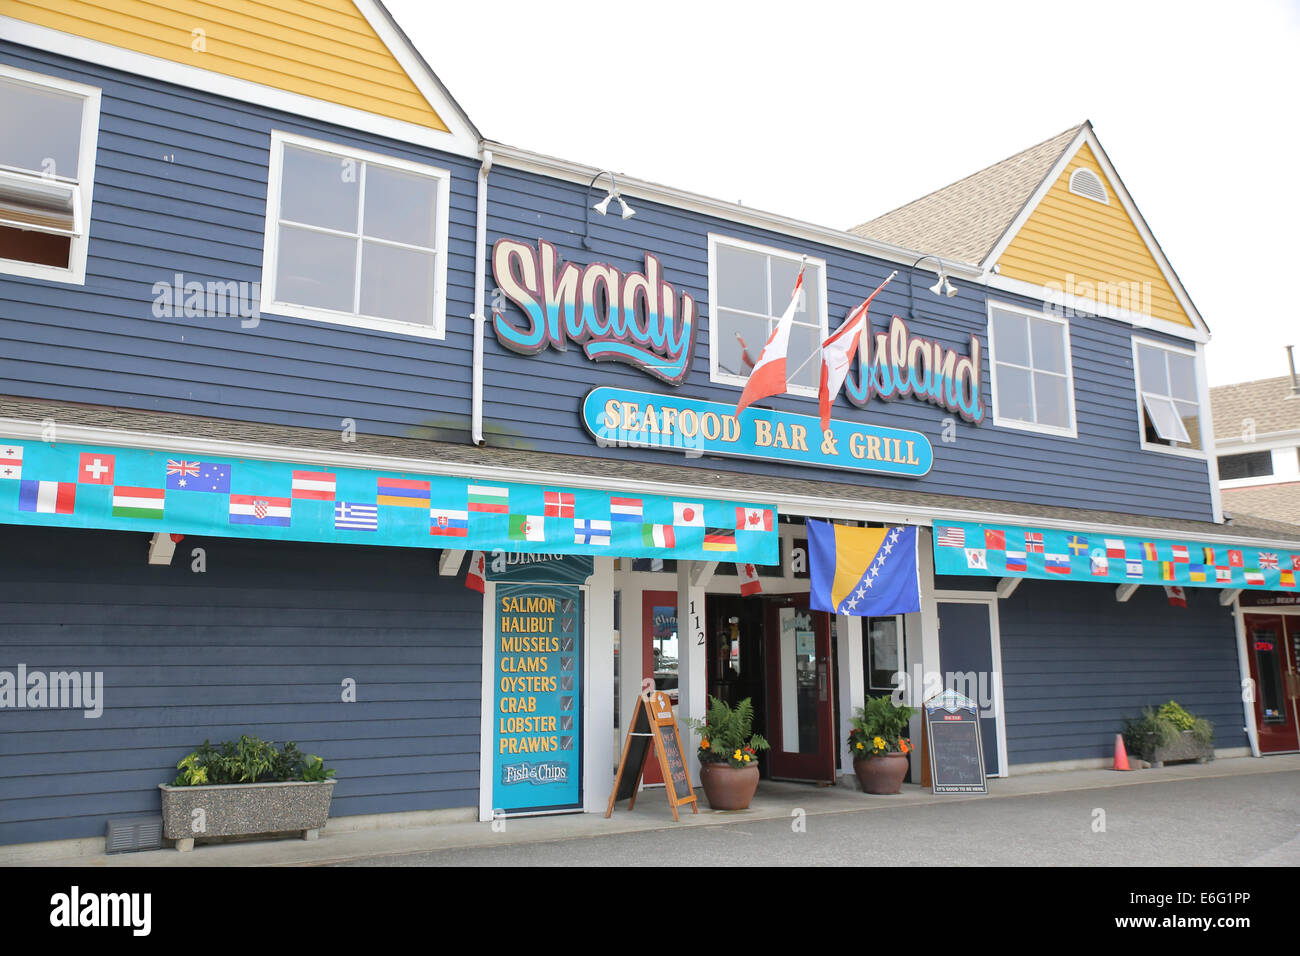 Shady island seafood bar grill Steveston BC Canada Stock Photo